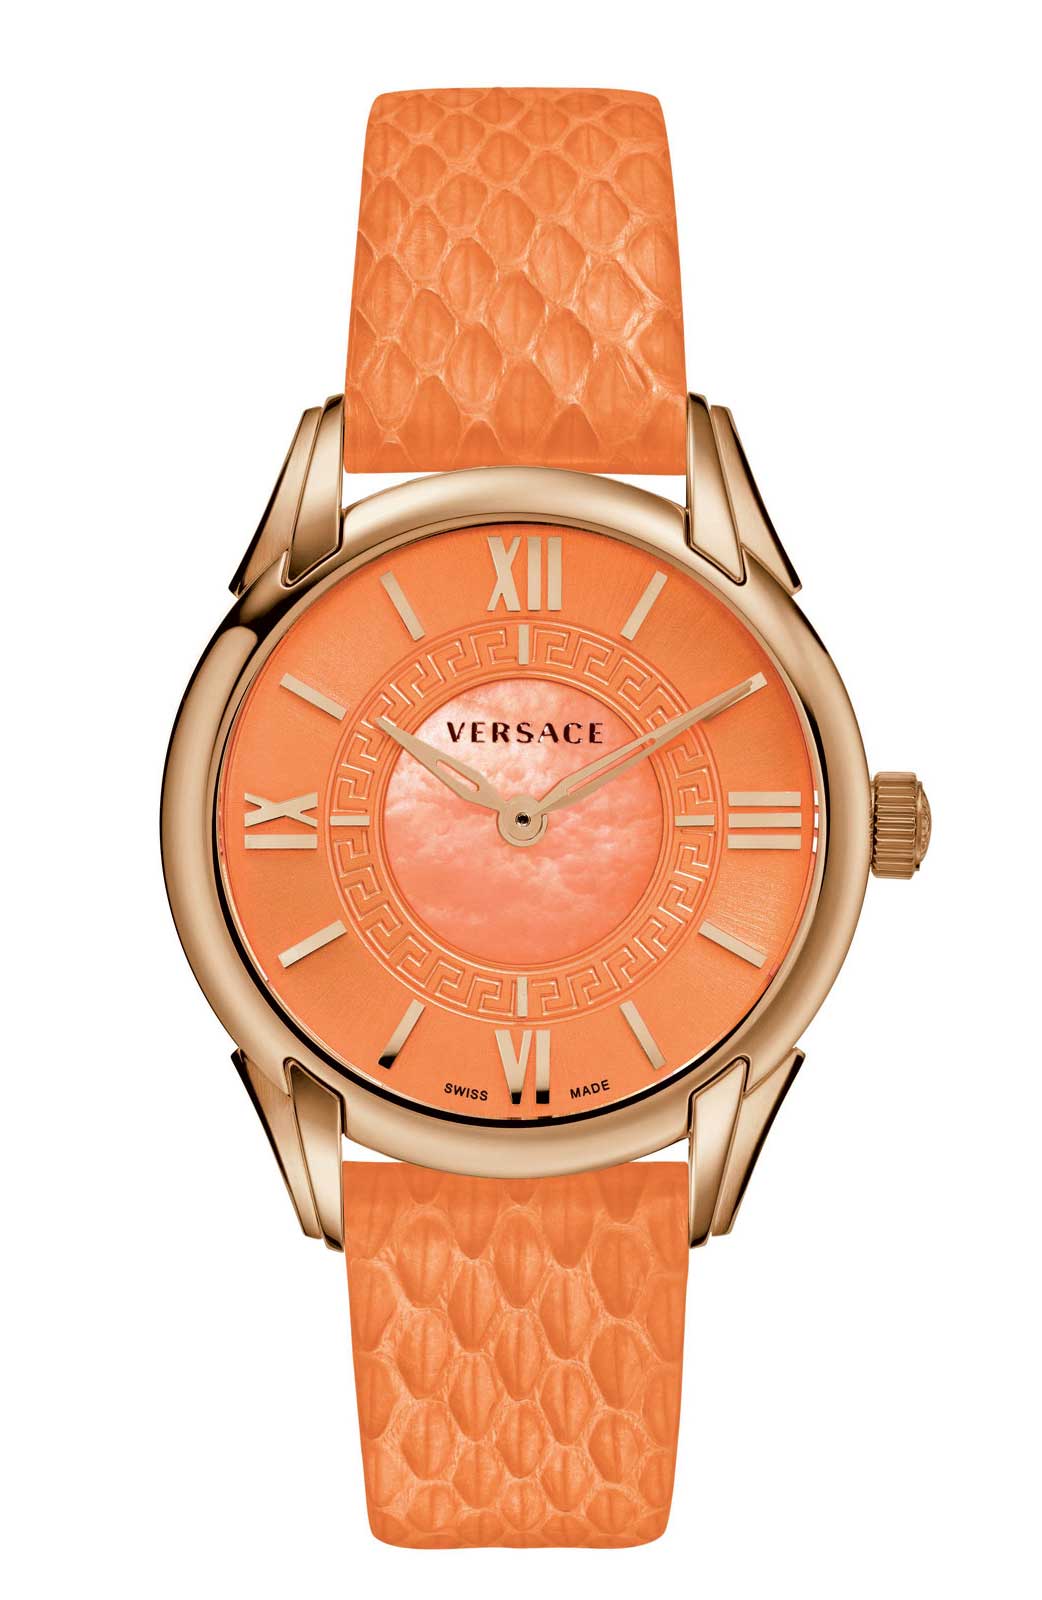 Versace QUARTZ watch 762.3 ORANGE